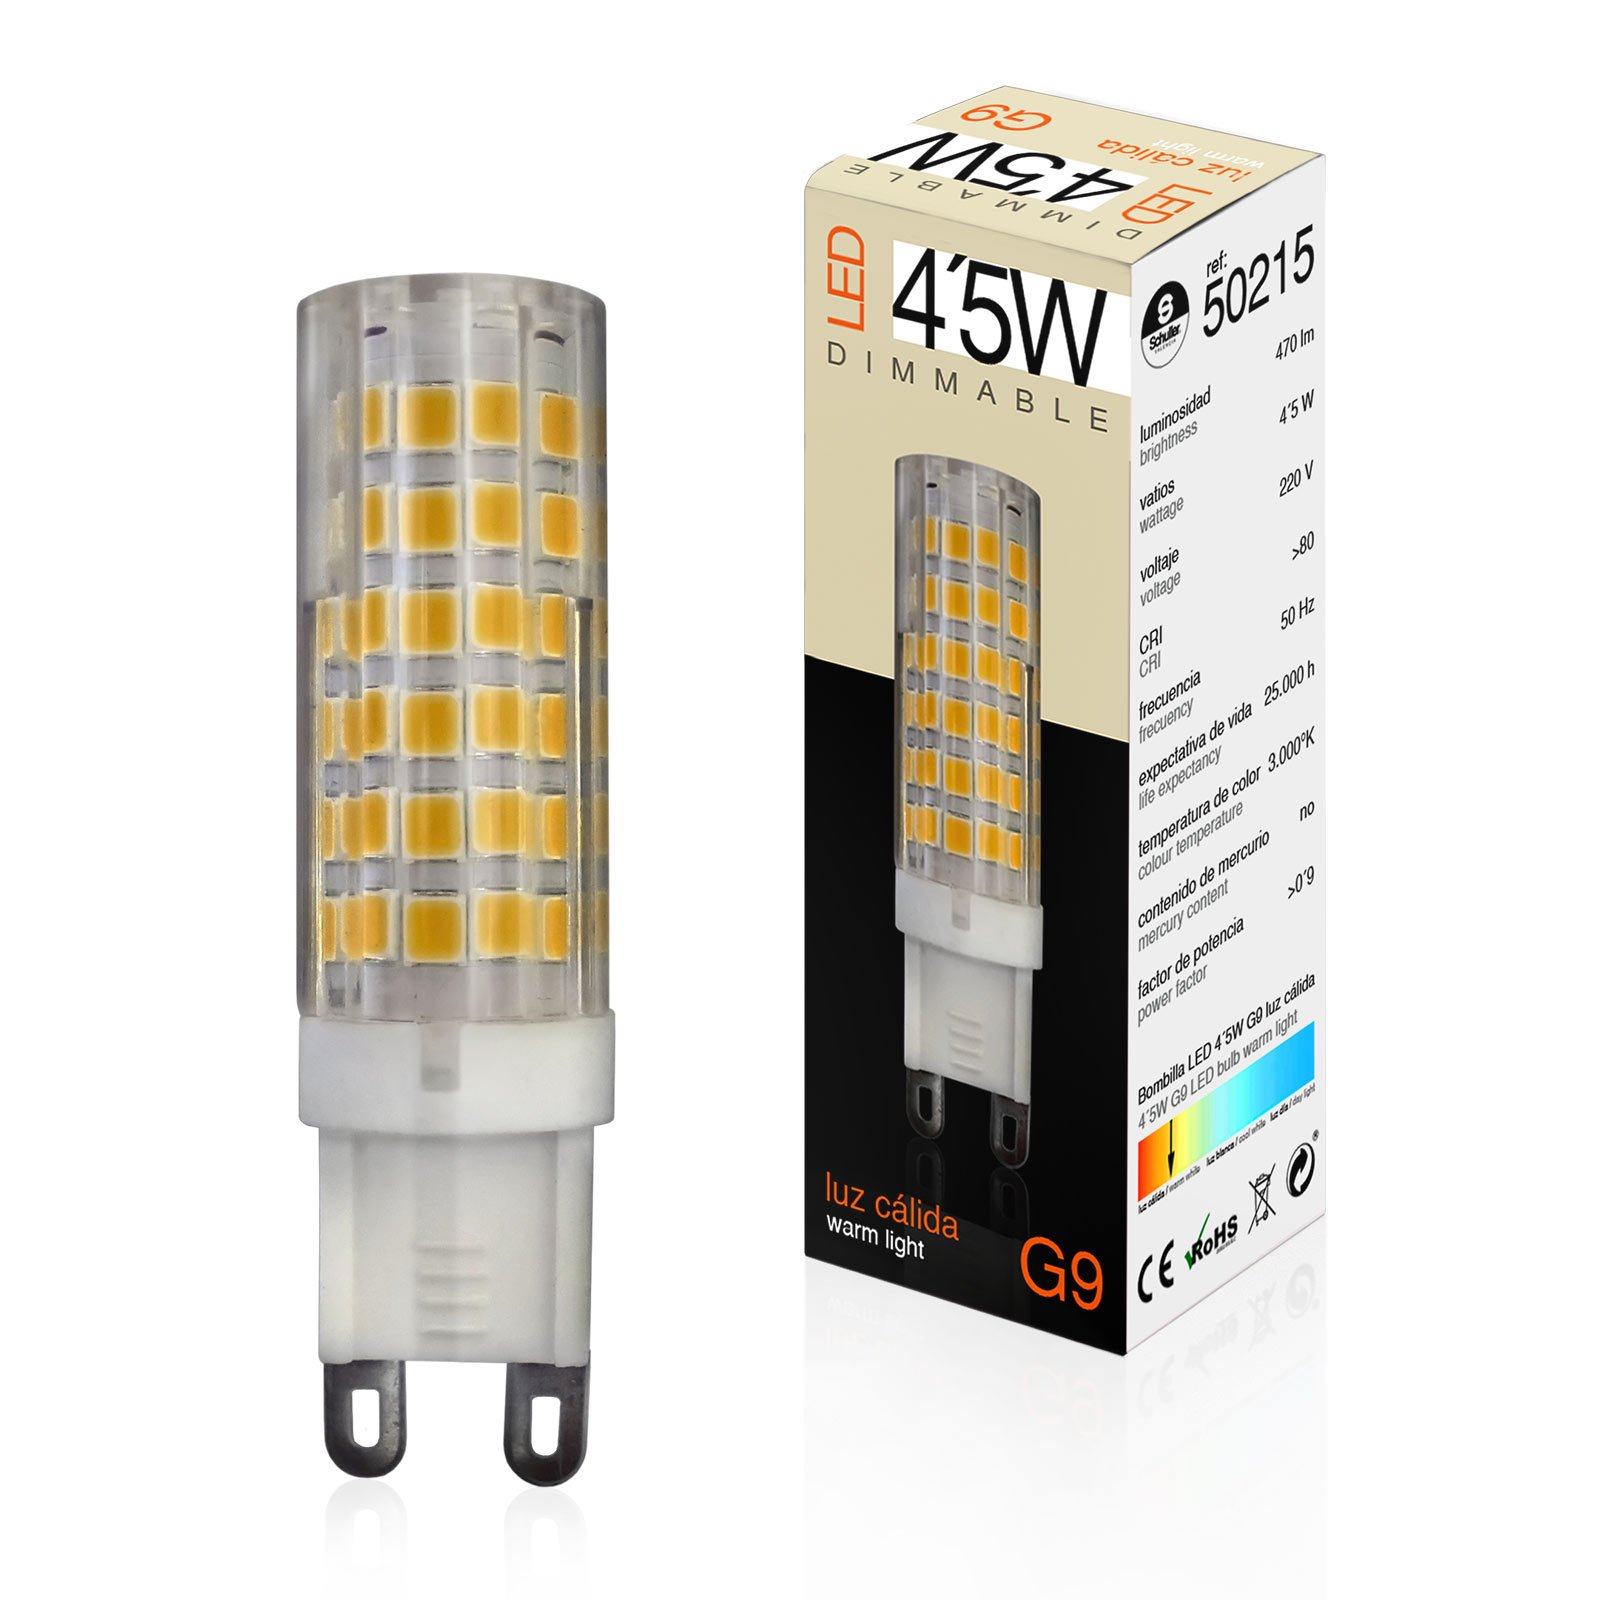 LED stiftlamp G9 4,5W 3.000K dimbaar